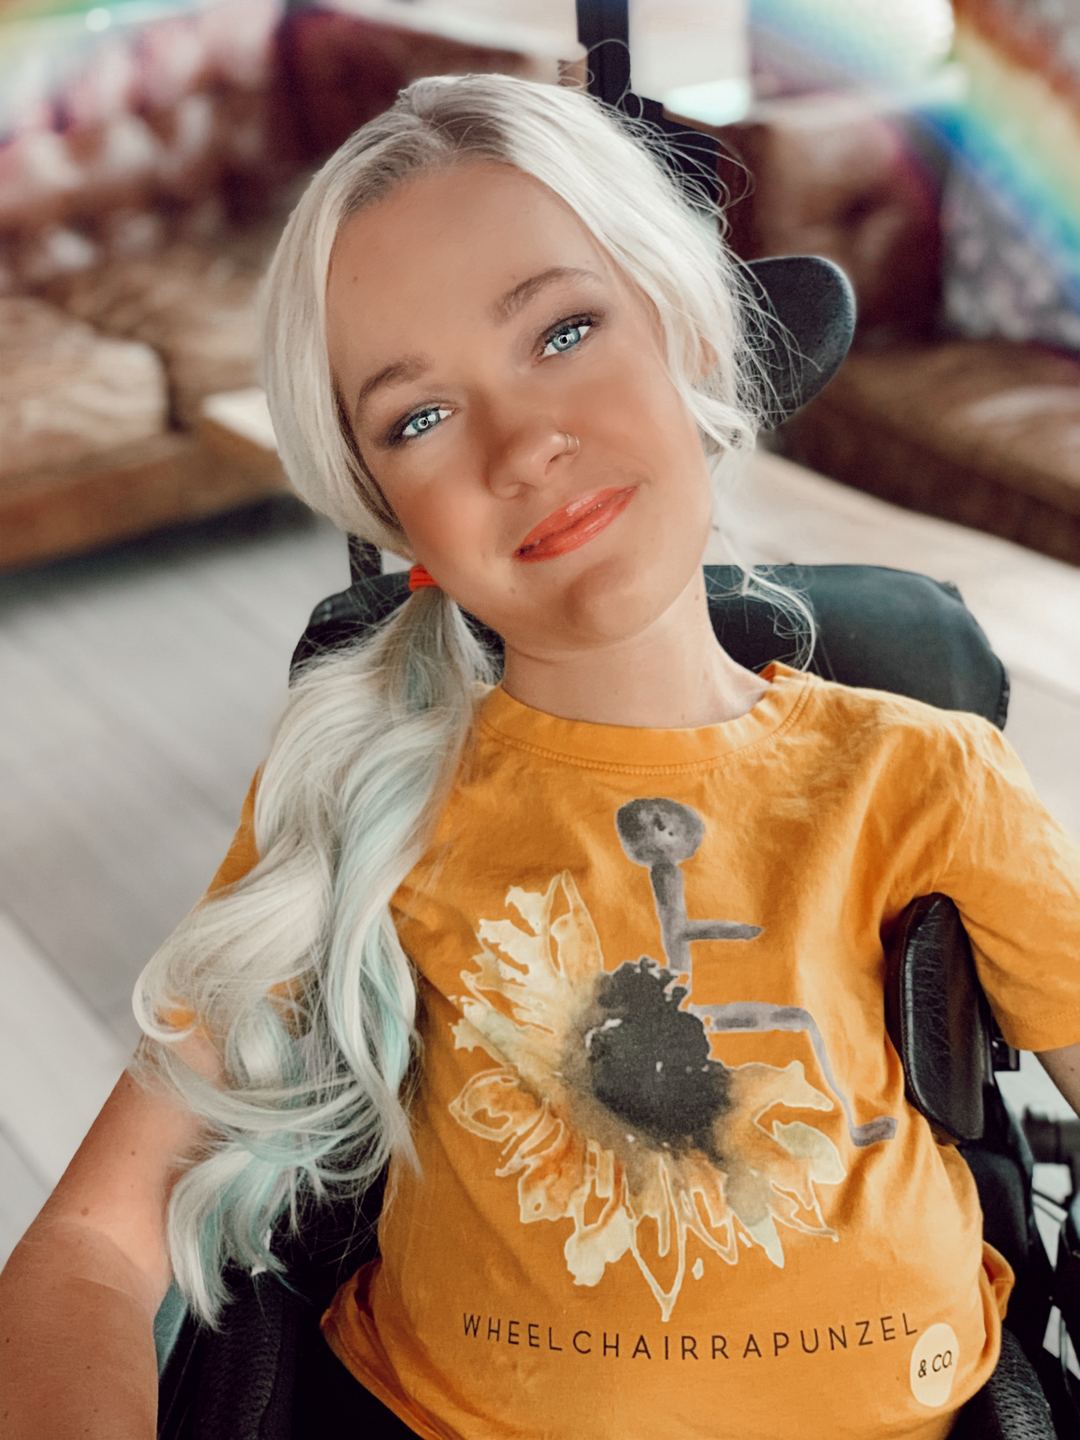 Alex Dacy (@wheelchair_rapunzel)'s videos with Inspiration